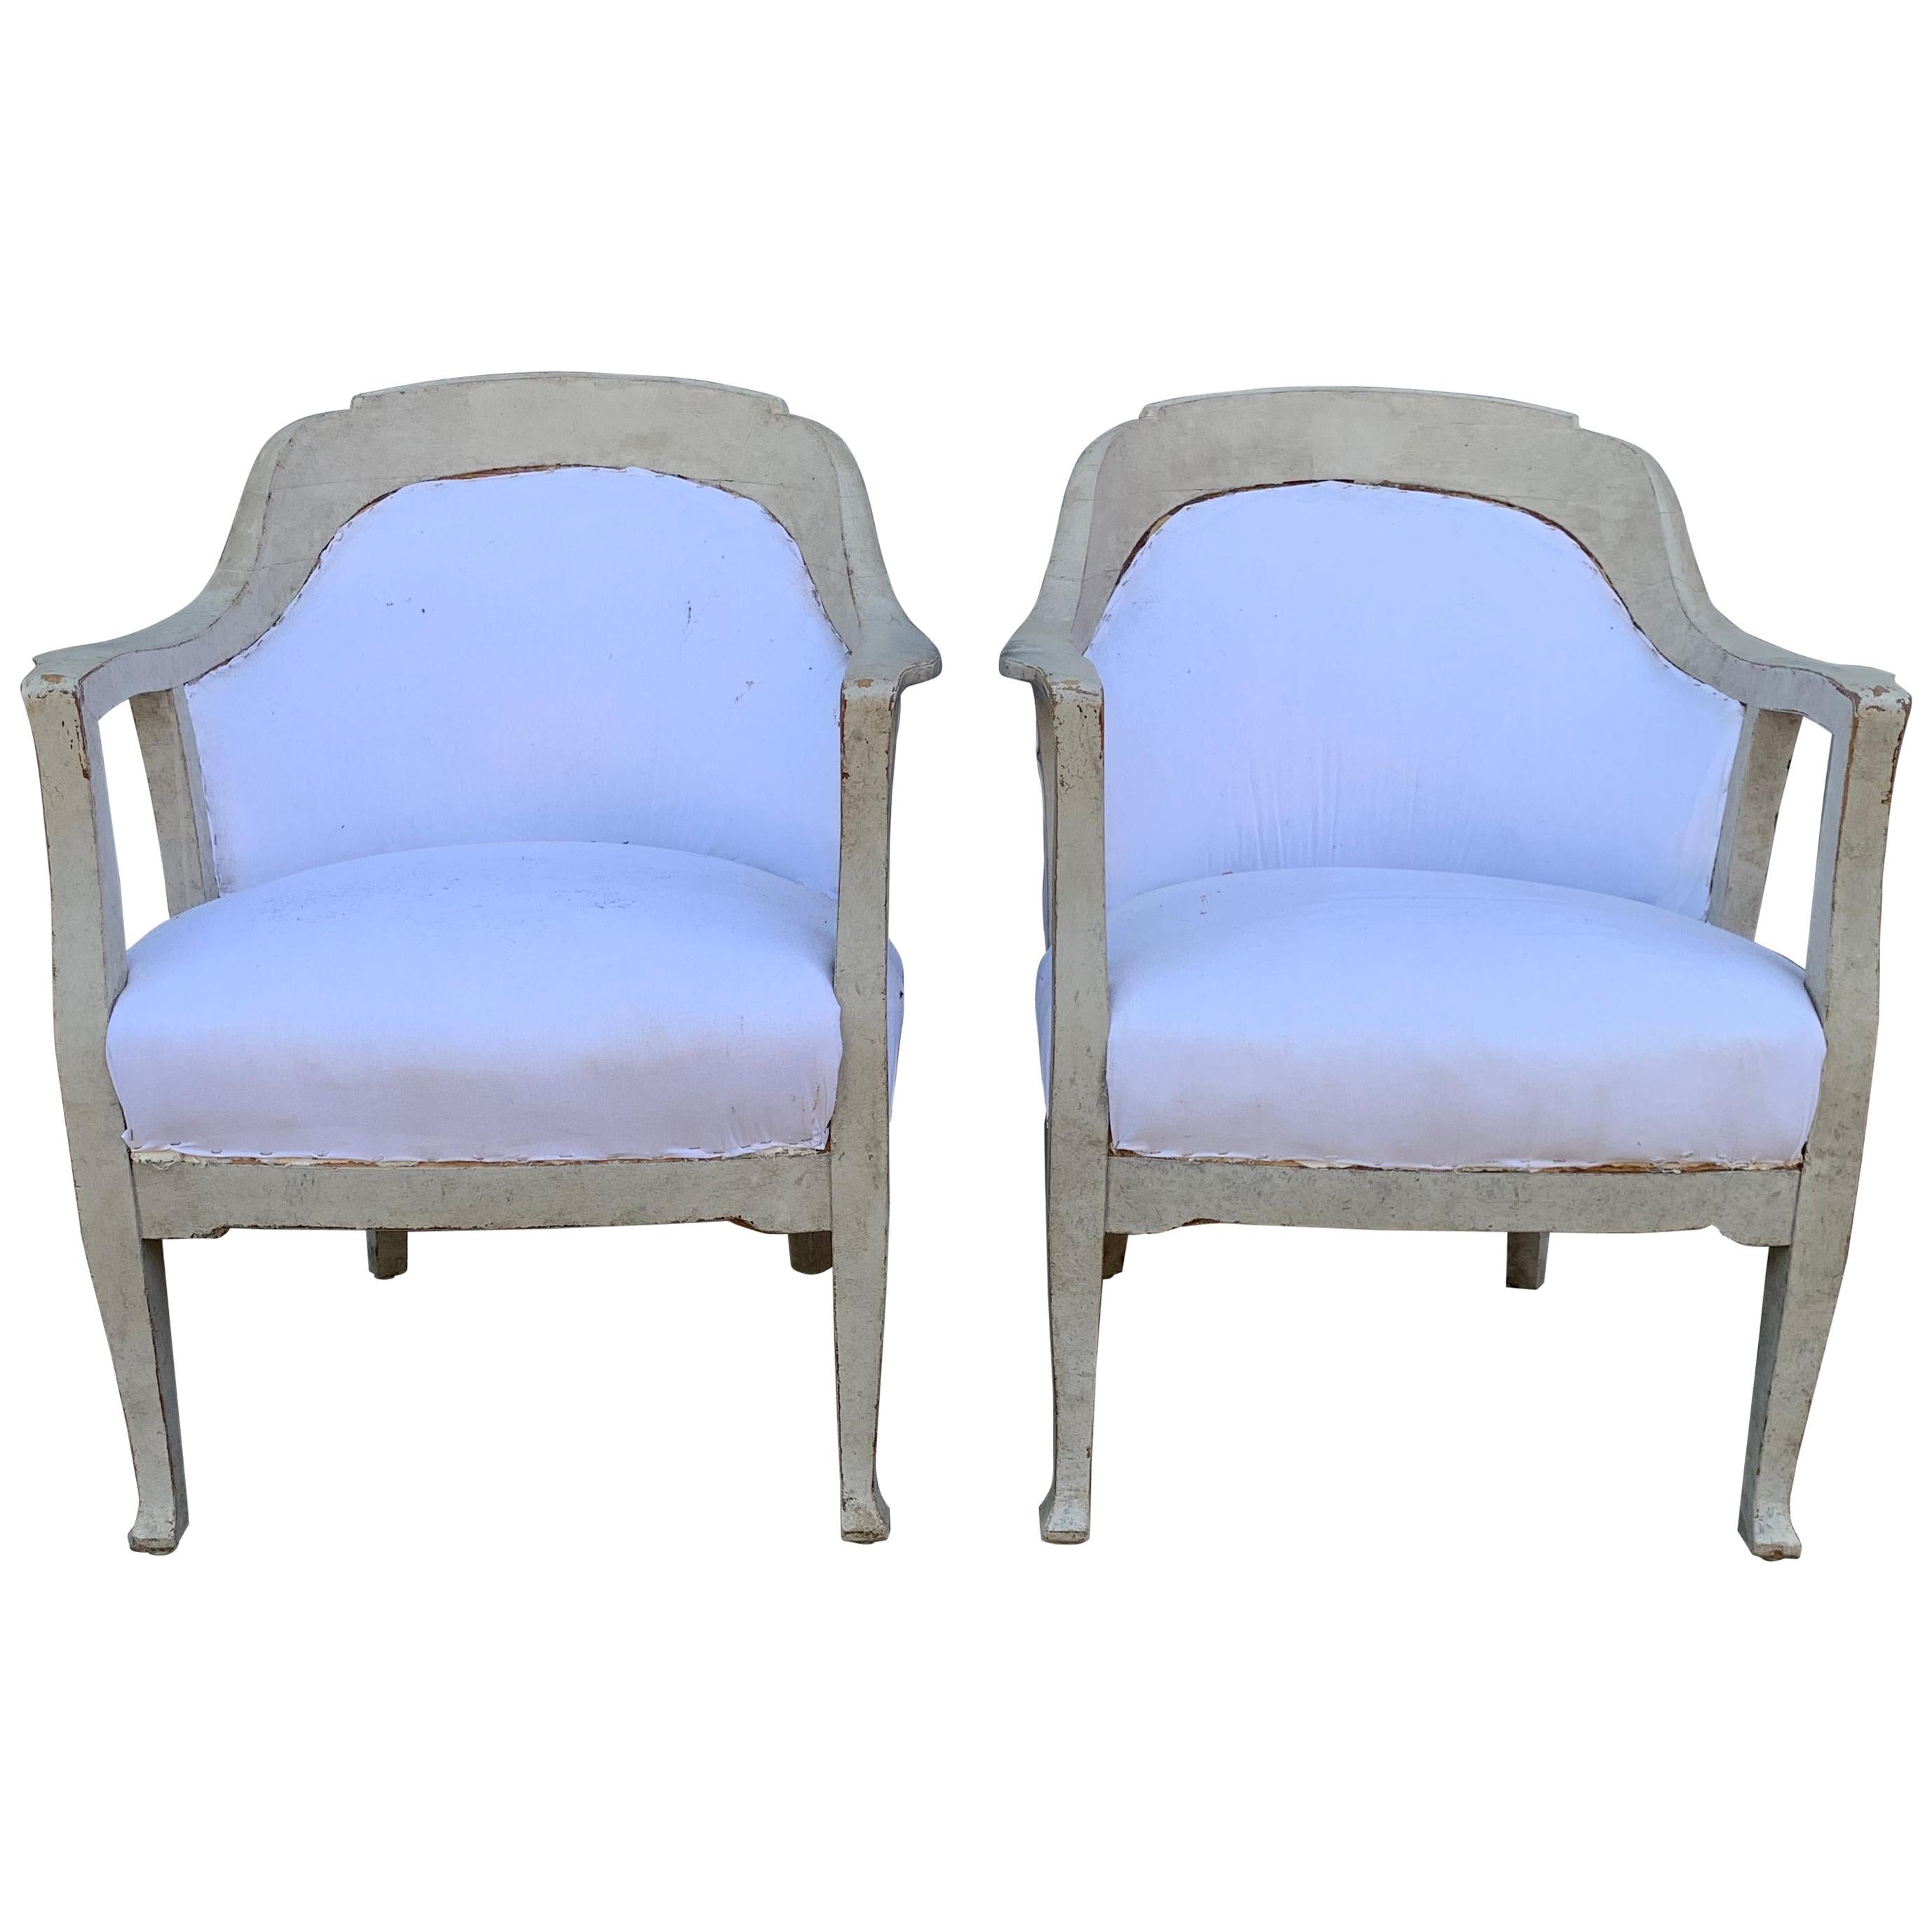 Pair of Scandinavian Gustavian Style Gray Painted Armchairs